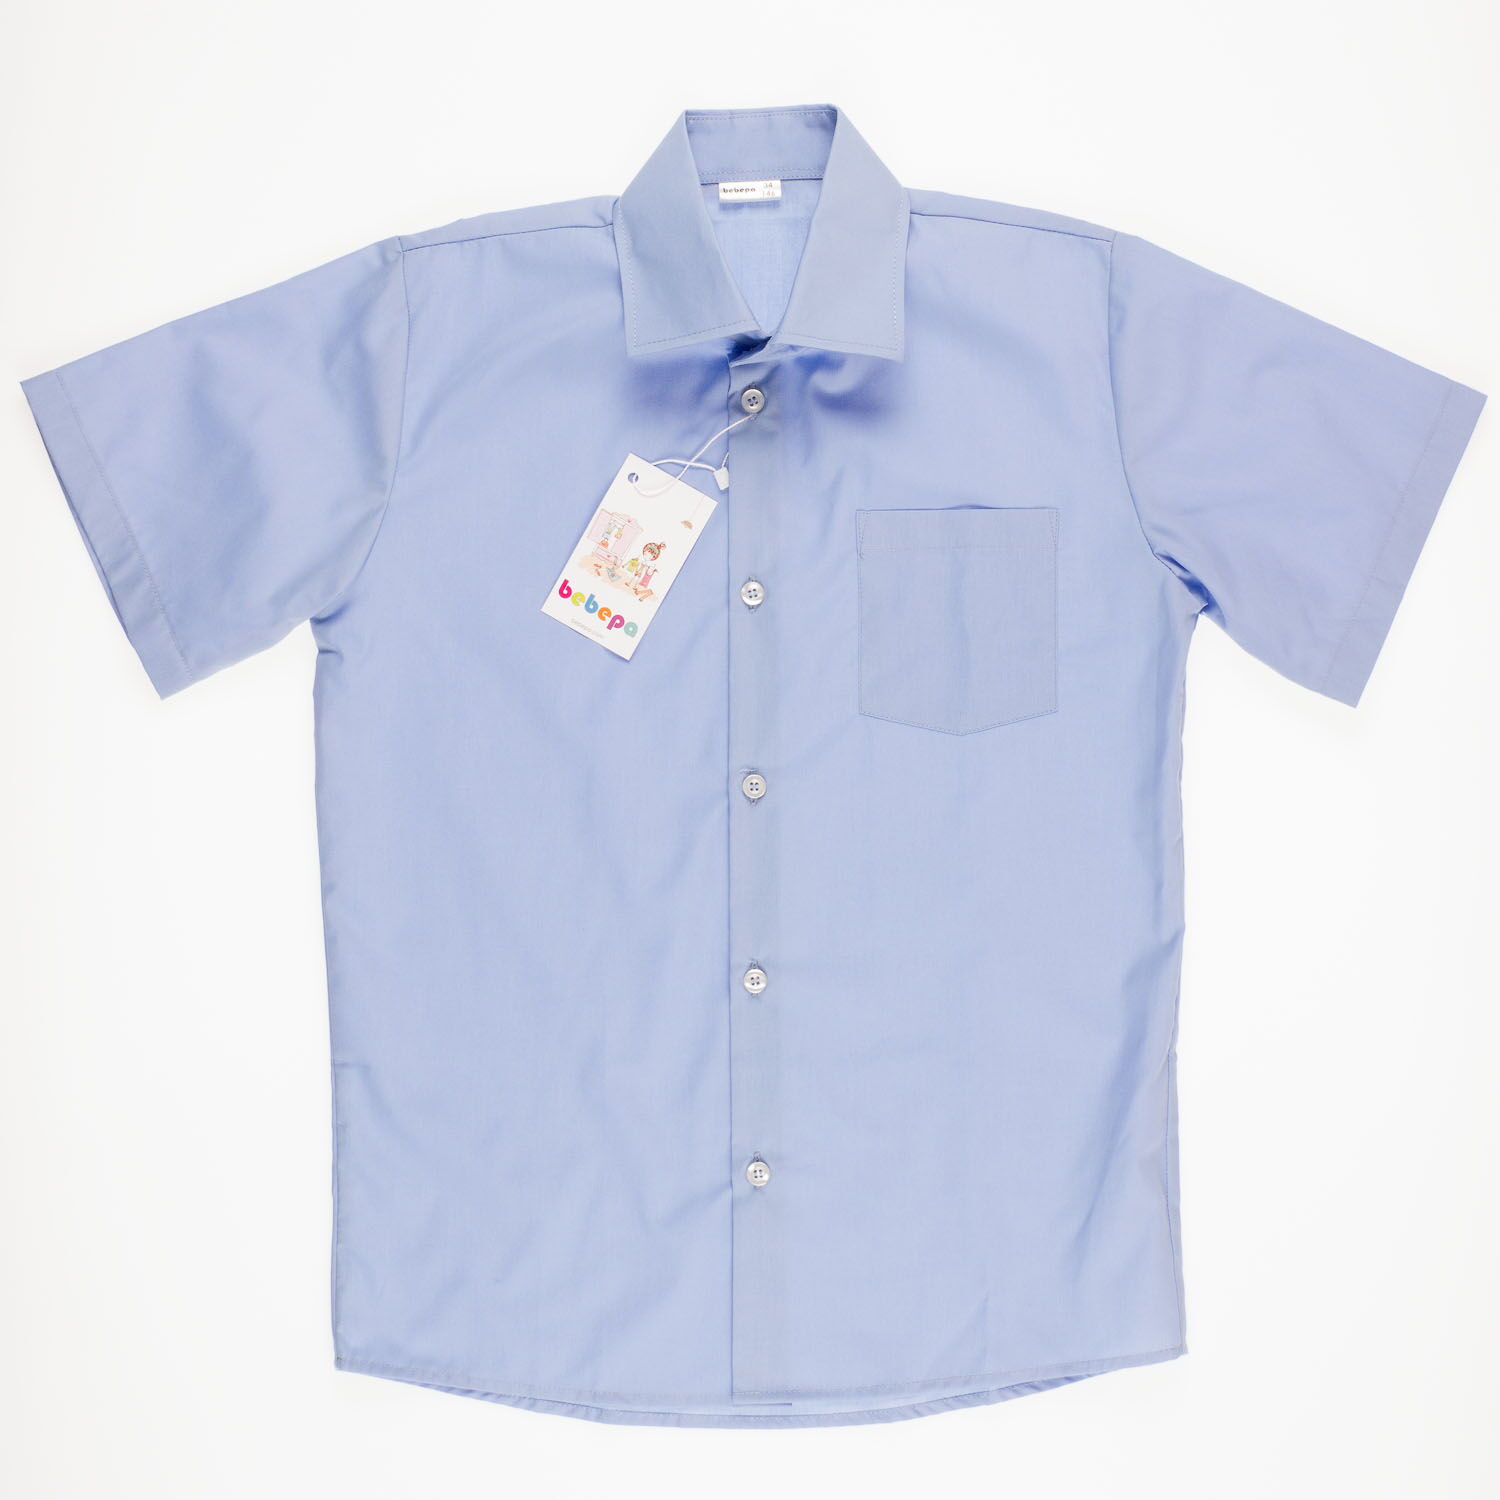 Рубашка с коротким рукавом для мальчика Bebepa синяя 1105-017 - фото